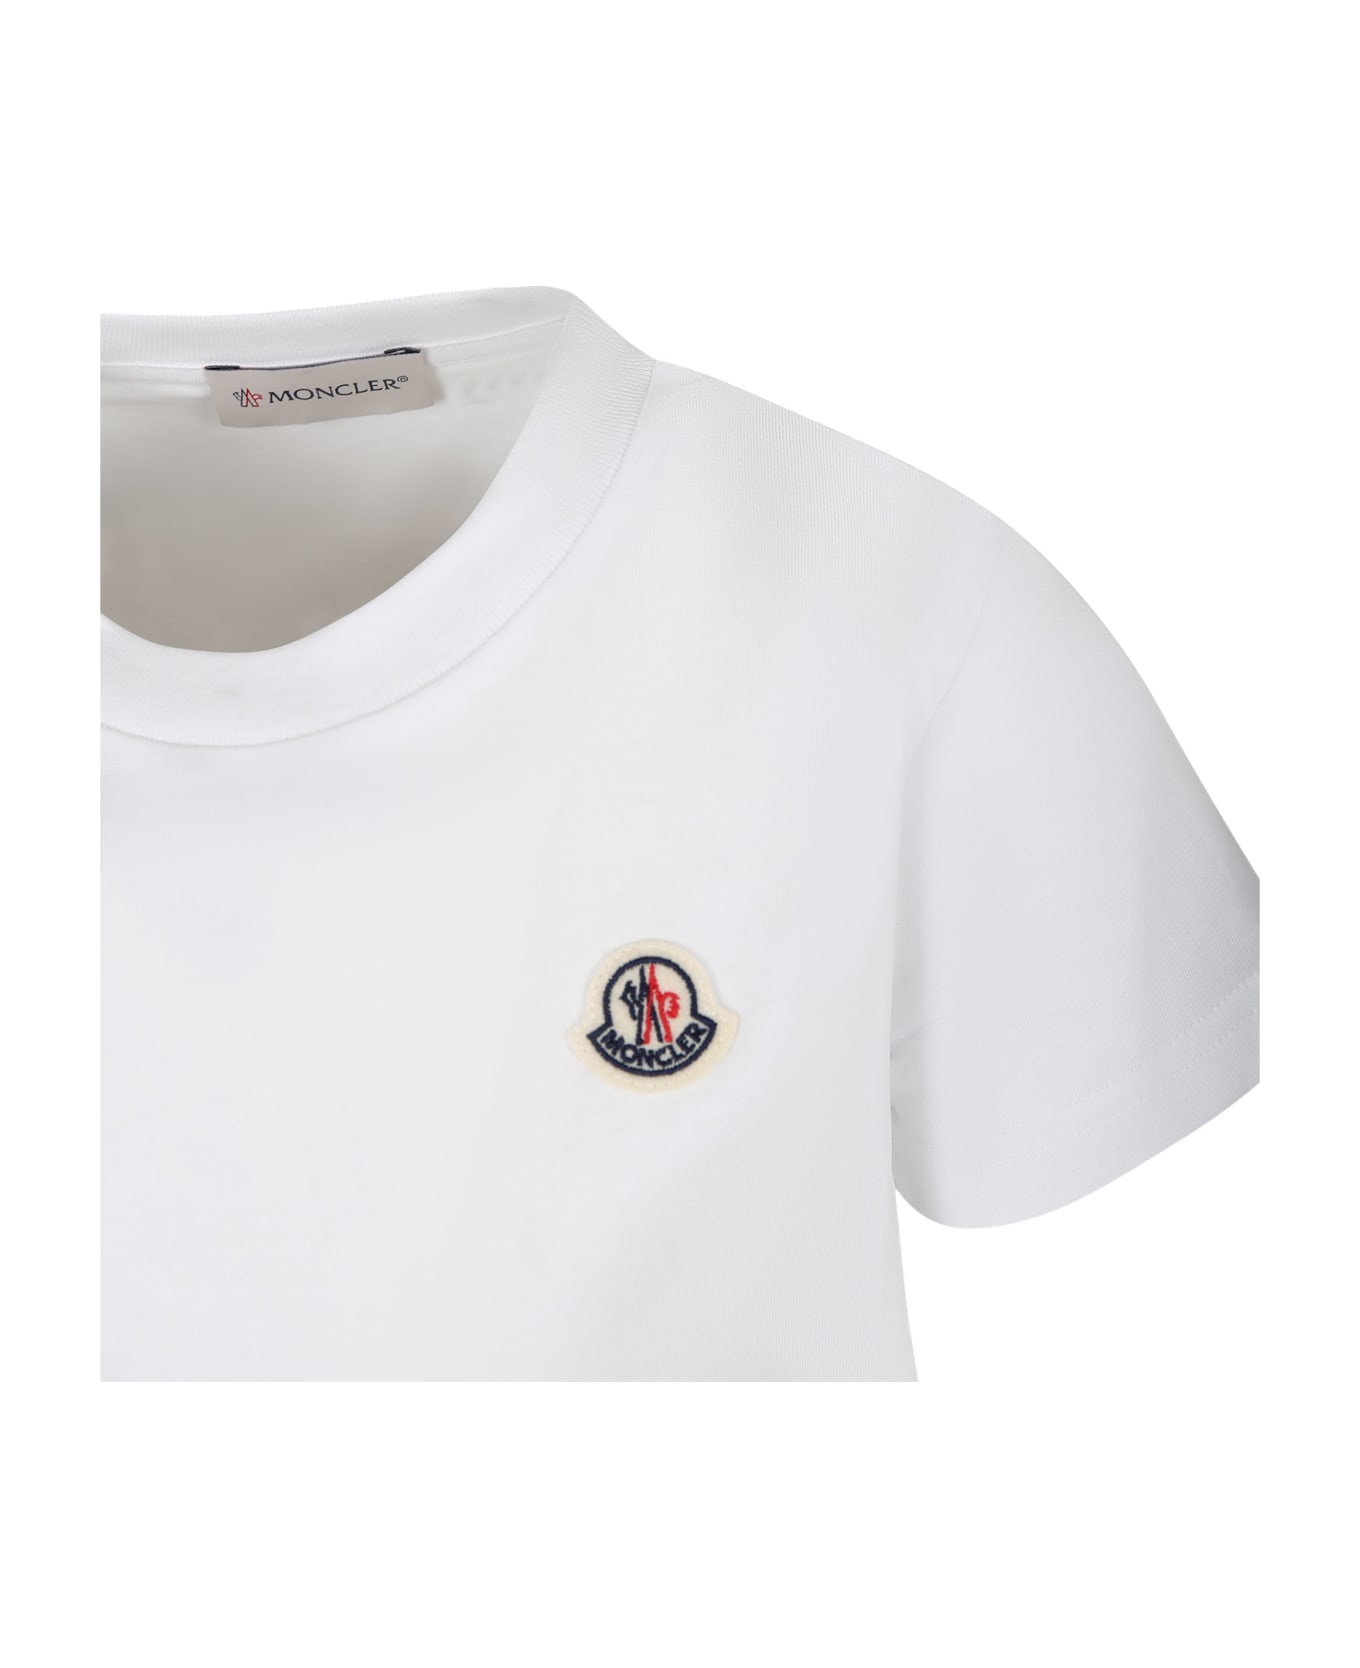 Moncler White T-shirt For Kids With Logo - White